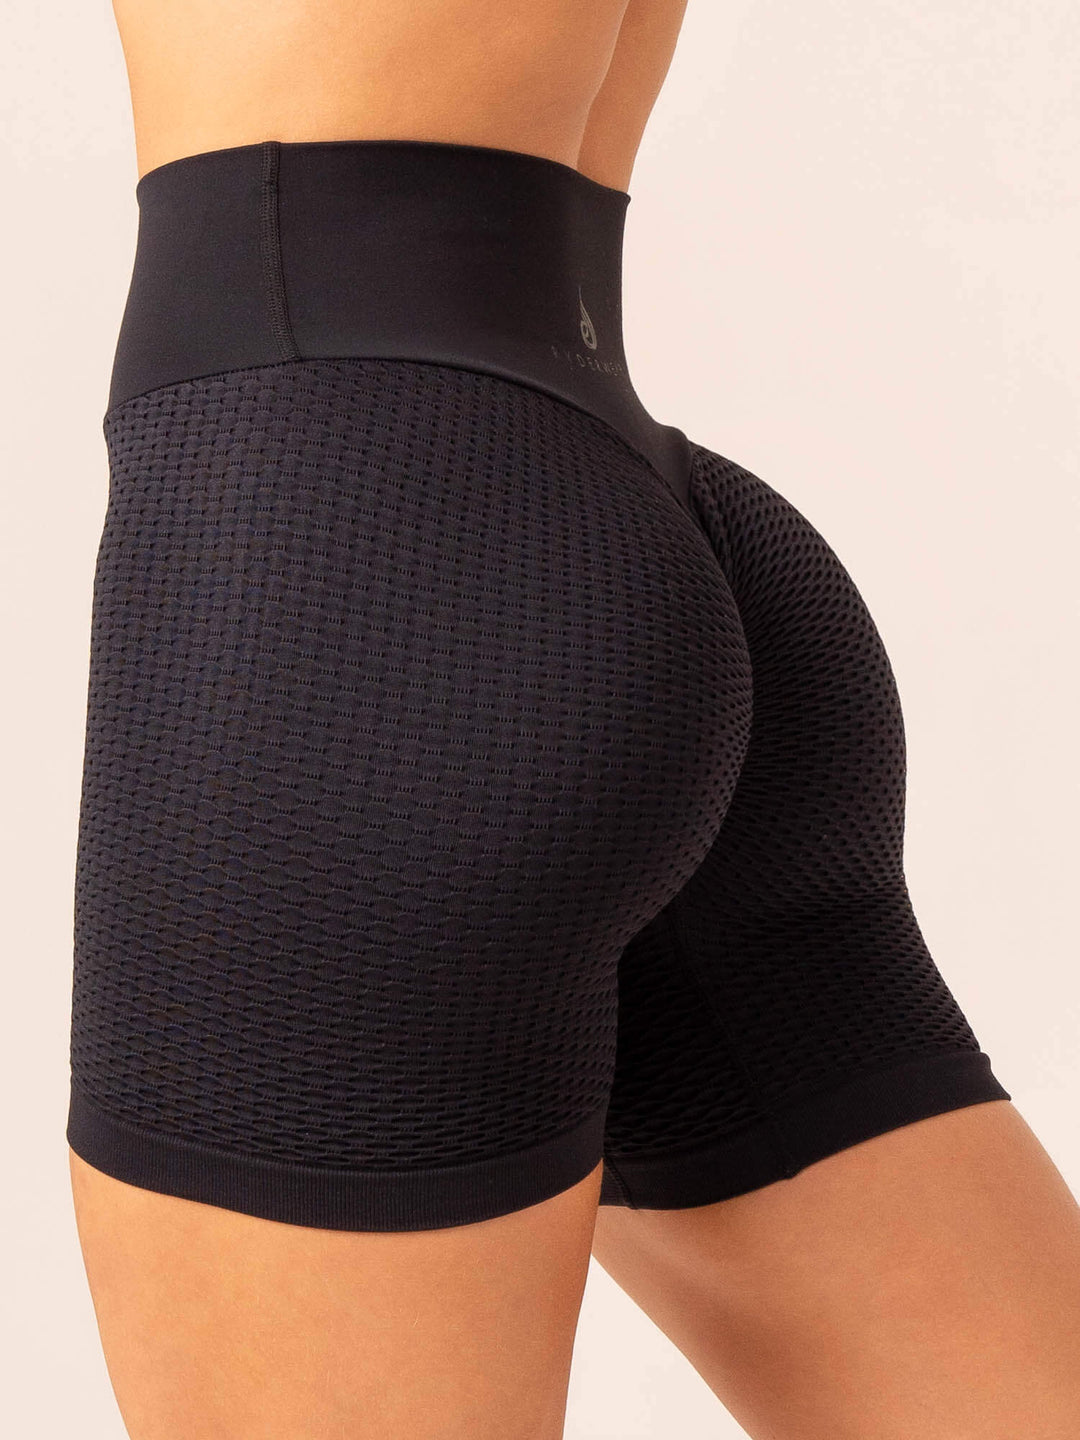 Wholesale High Waisted Bike Shorts Scrunch Butt Gym Shorts Women